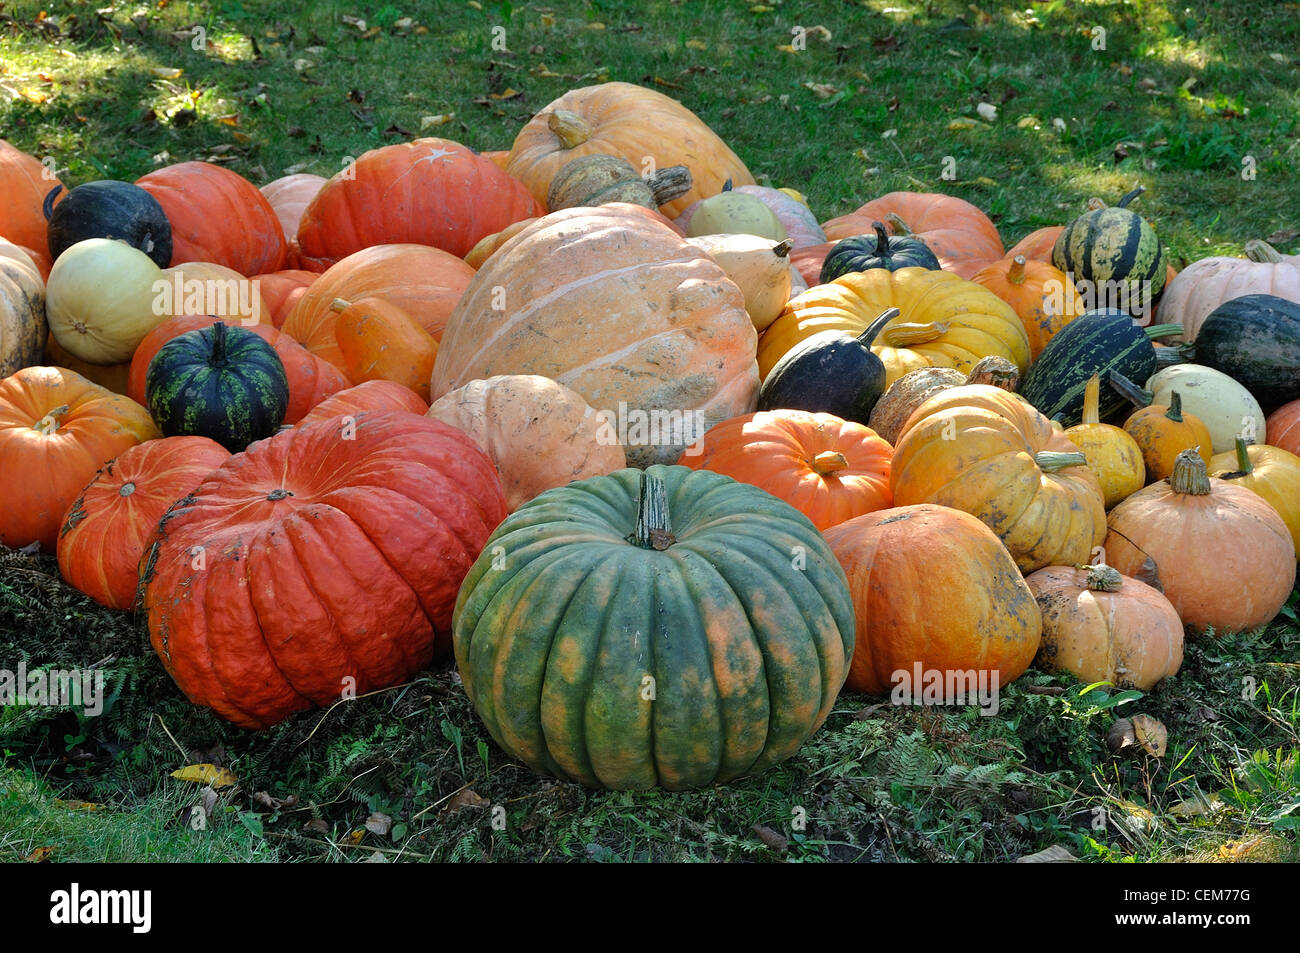 Exhibition of various varieties of pumpkins  (Cucurbita maxima). Stock Photo